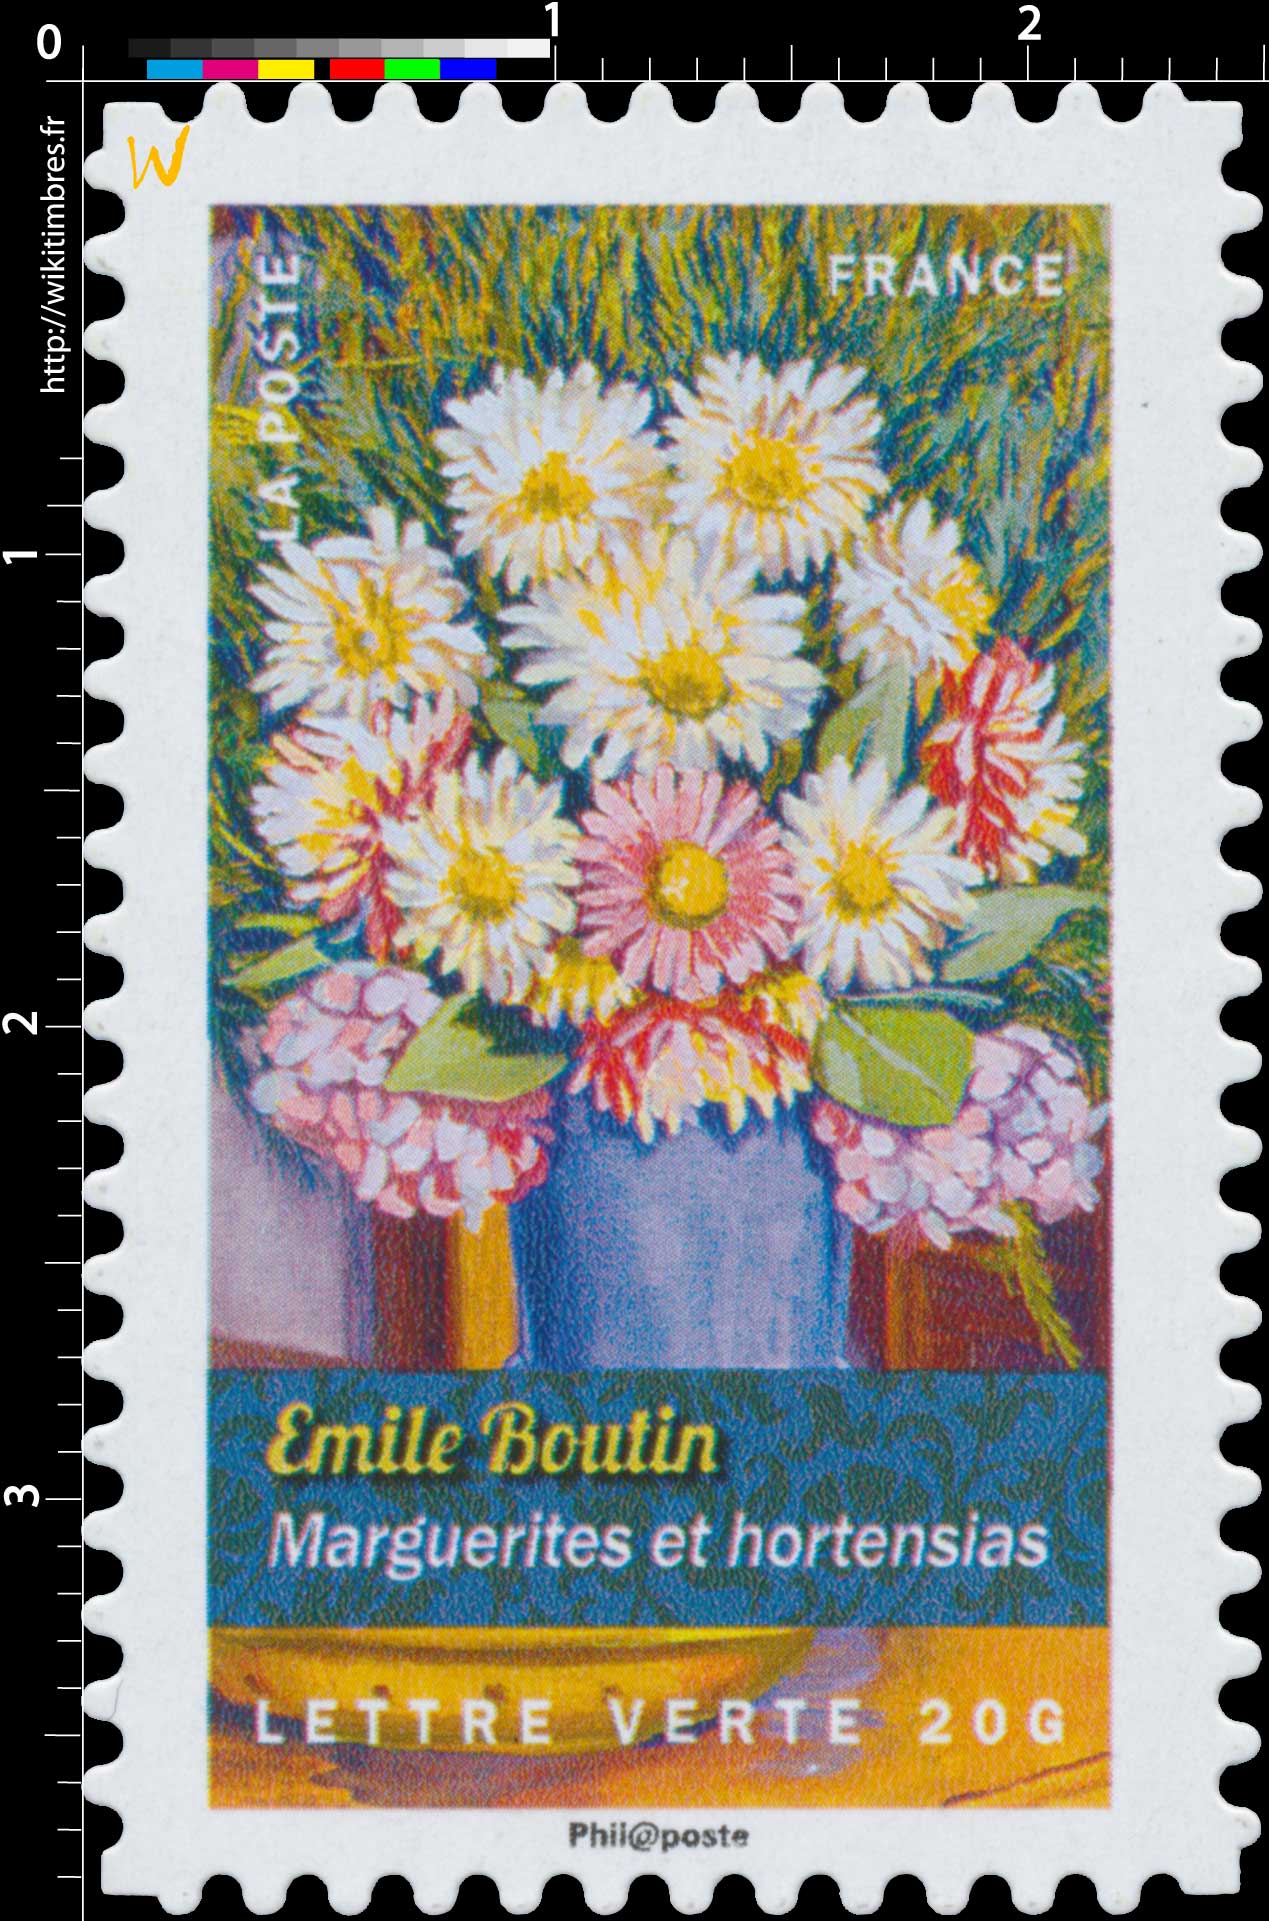 2015 Emile Boutin - Marguerites et hortensias